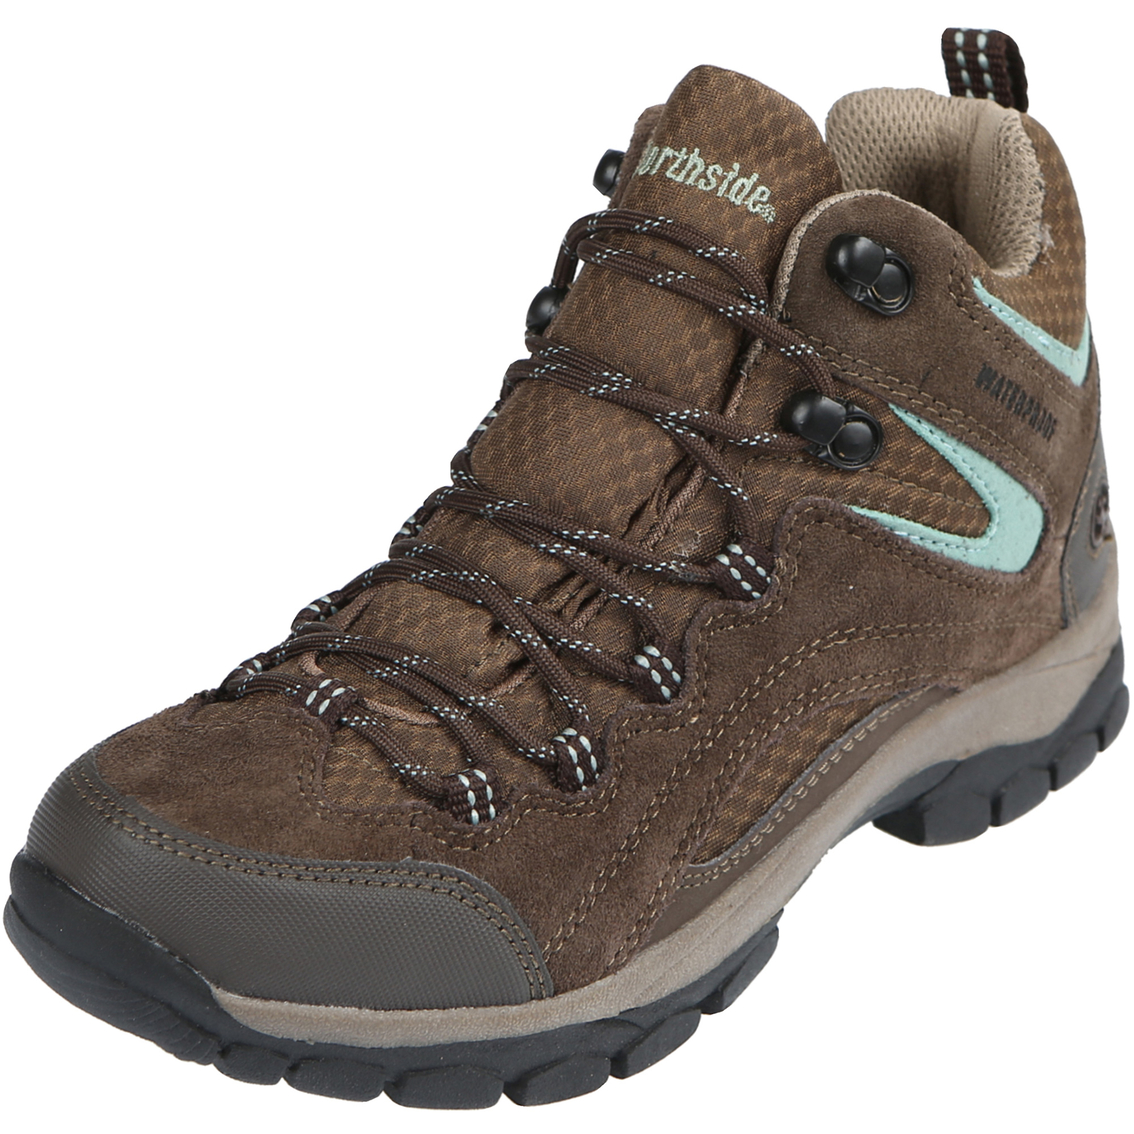 Northside Women's Pioneer Mid Leather Waterproof Hiking Shoes | Women's ...